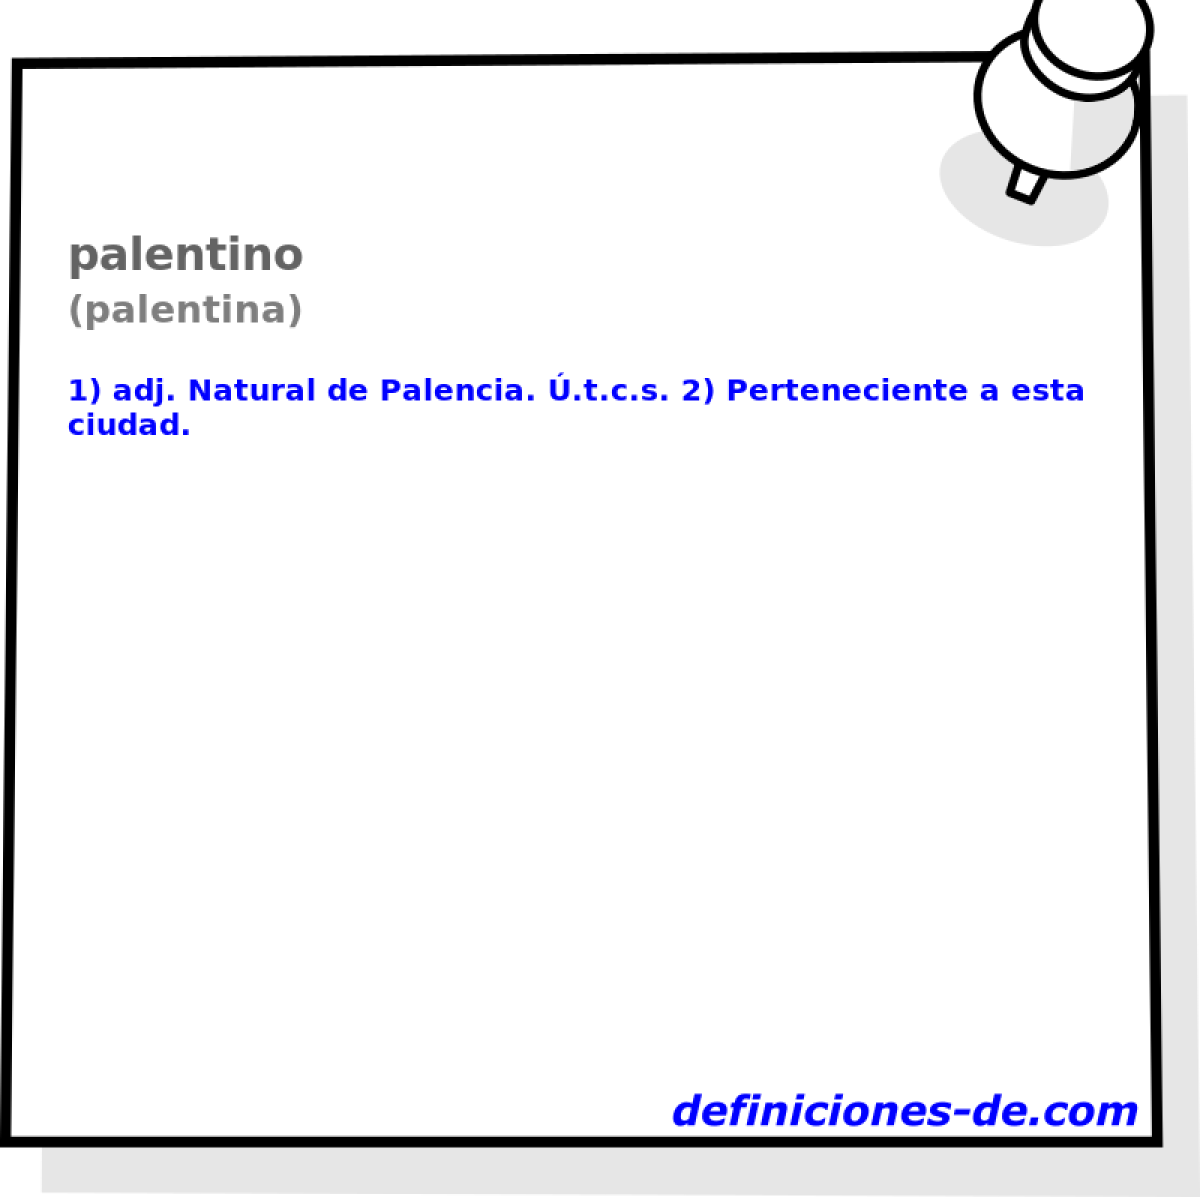 palentino (palentina)